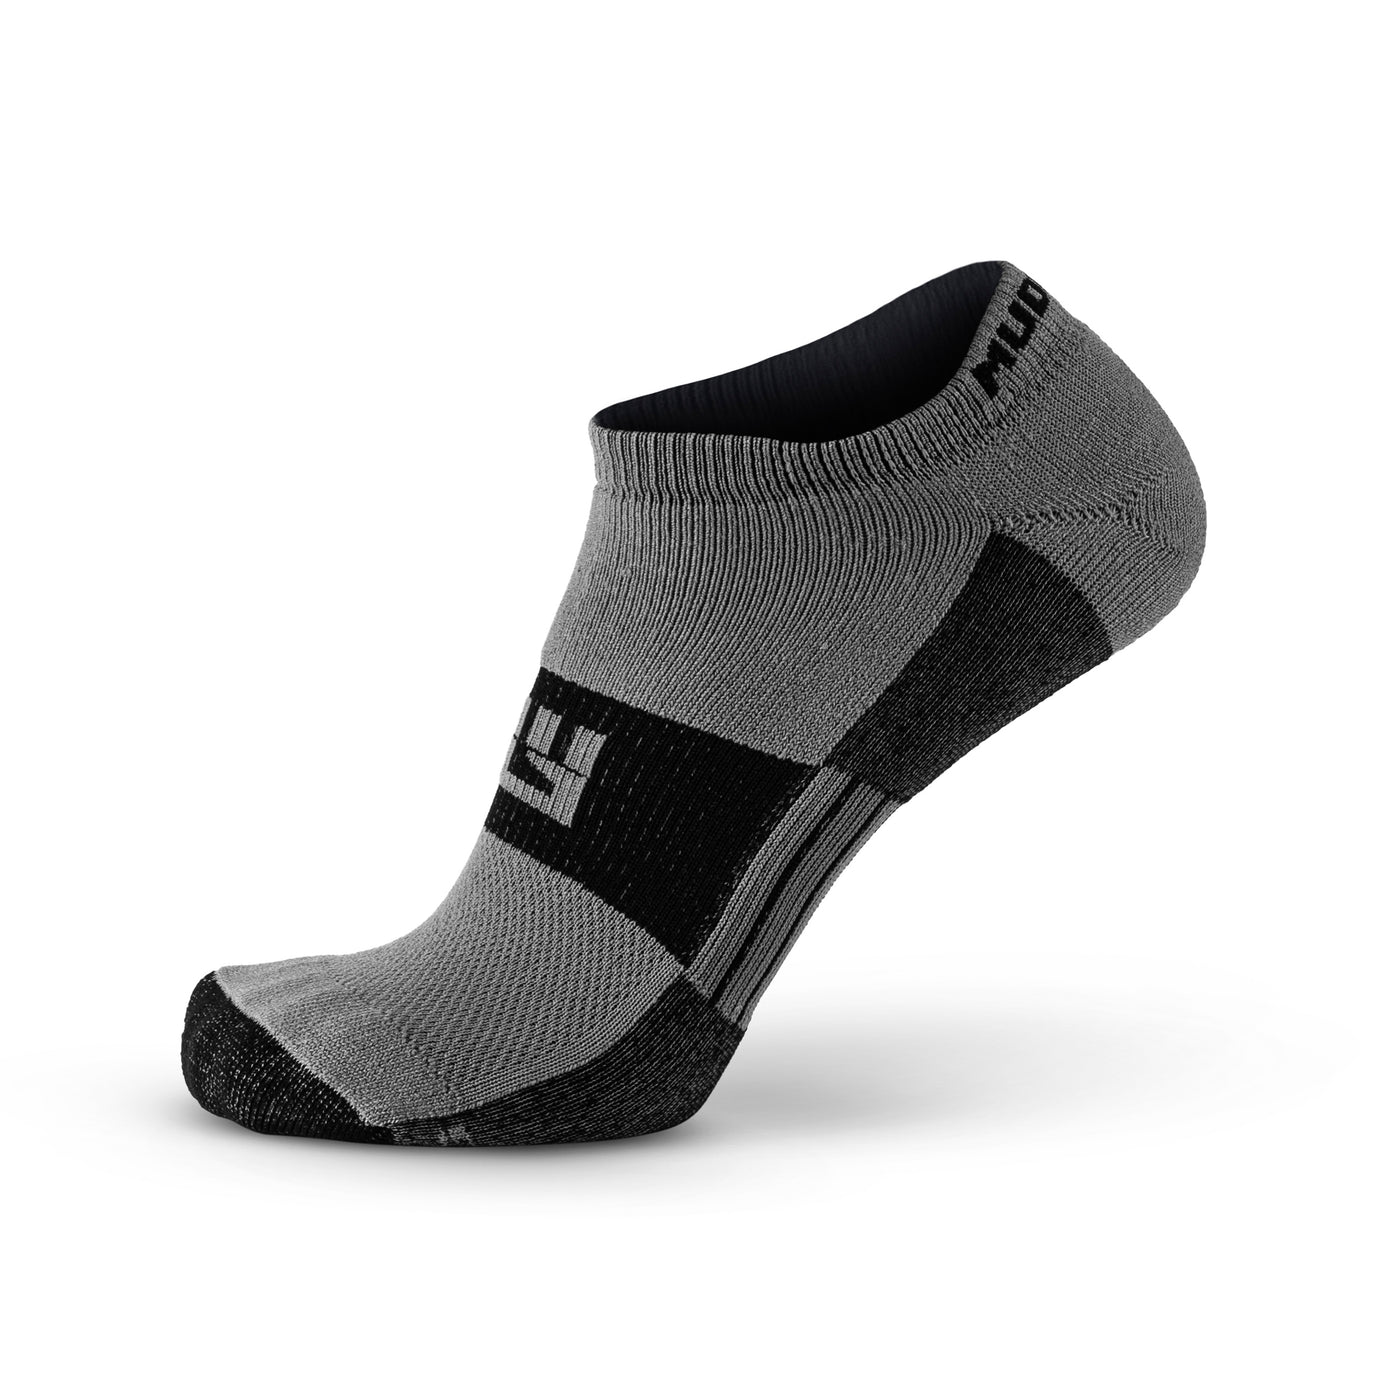 No-Show Running Socks - Gray/Black (2 Pair Pack)